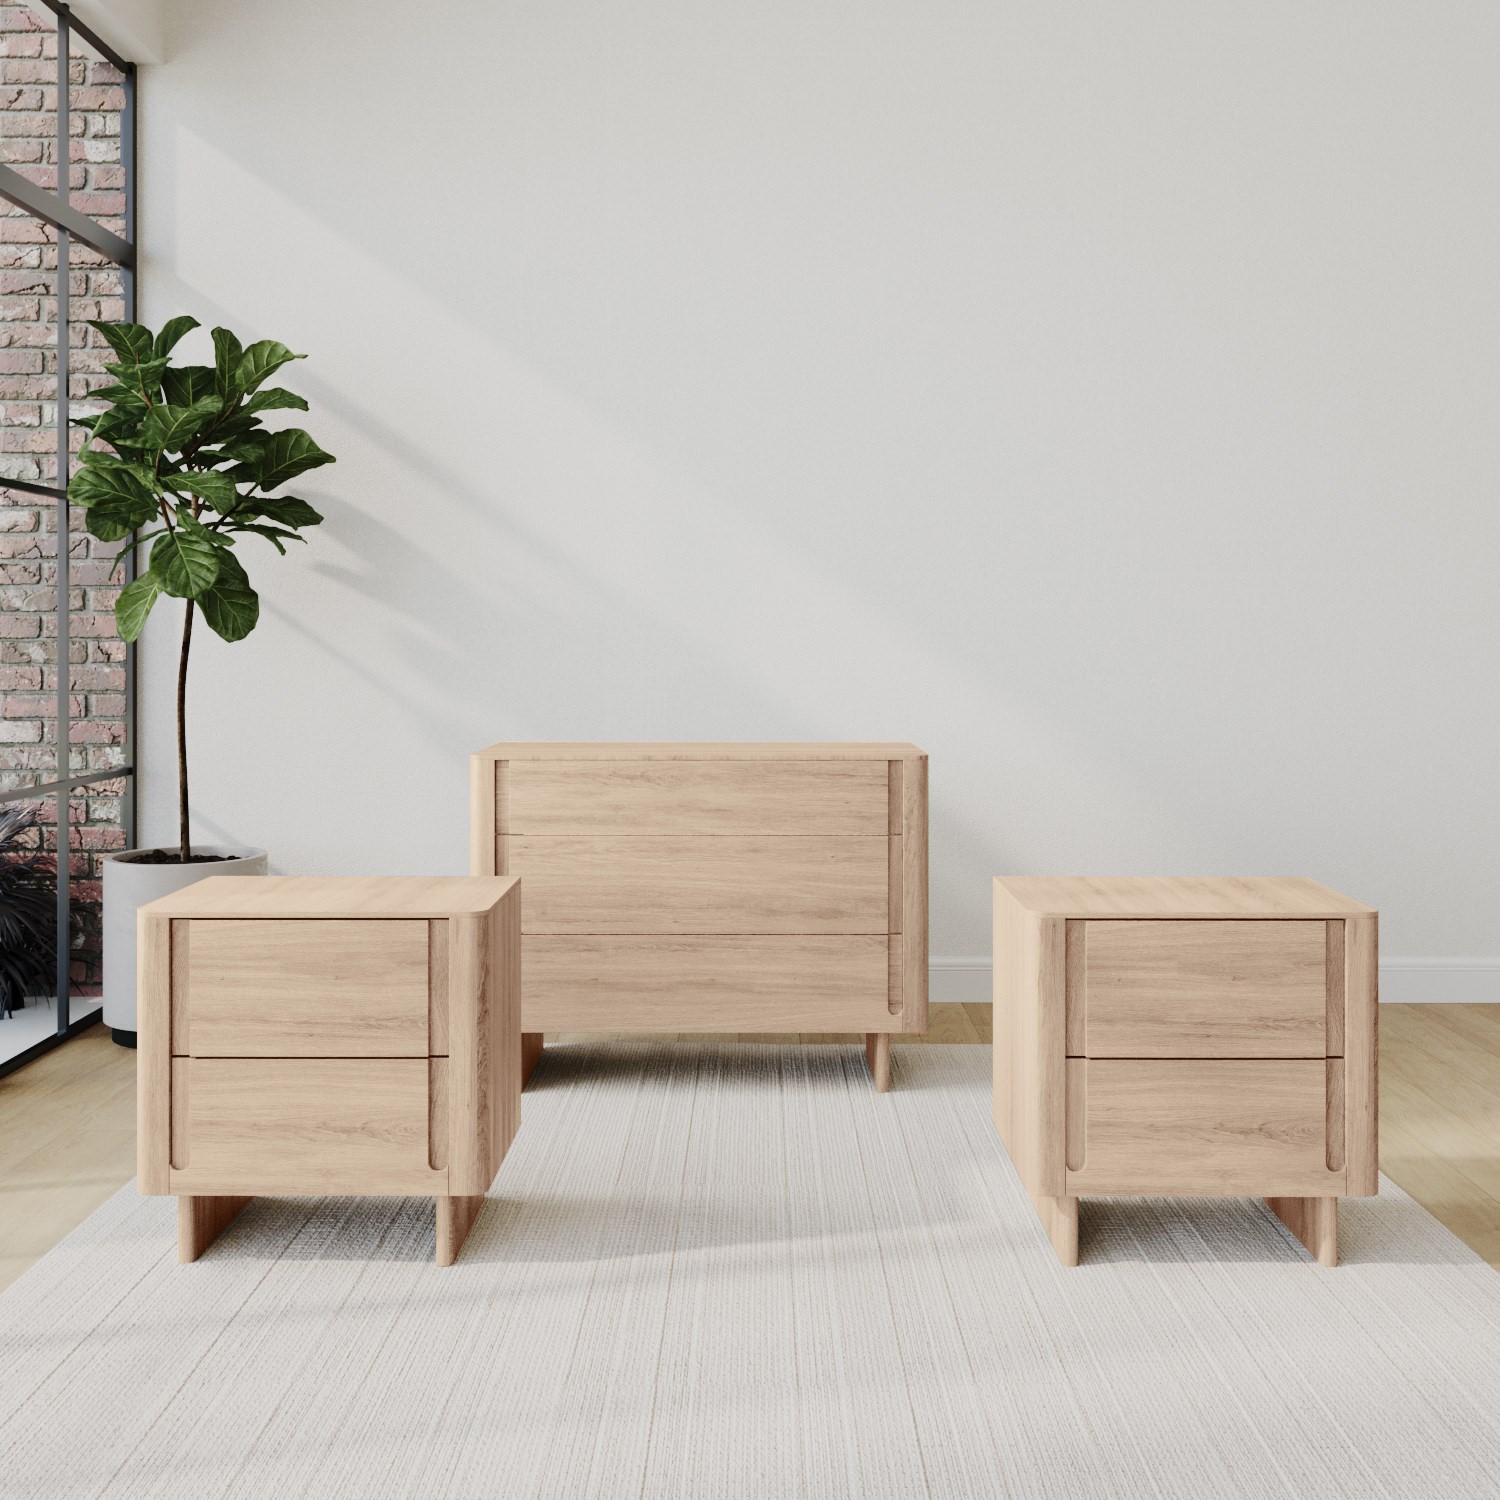 Photo of Light wood 3 piece bedroom furniture set - emile sustainable furniture